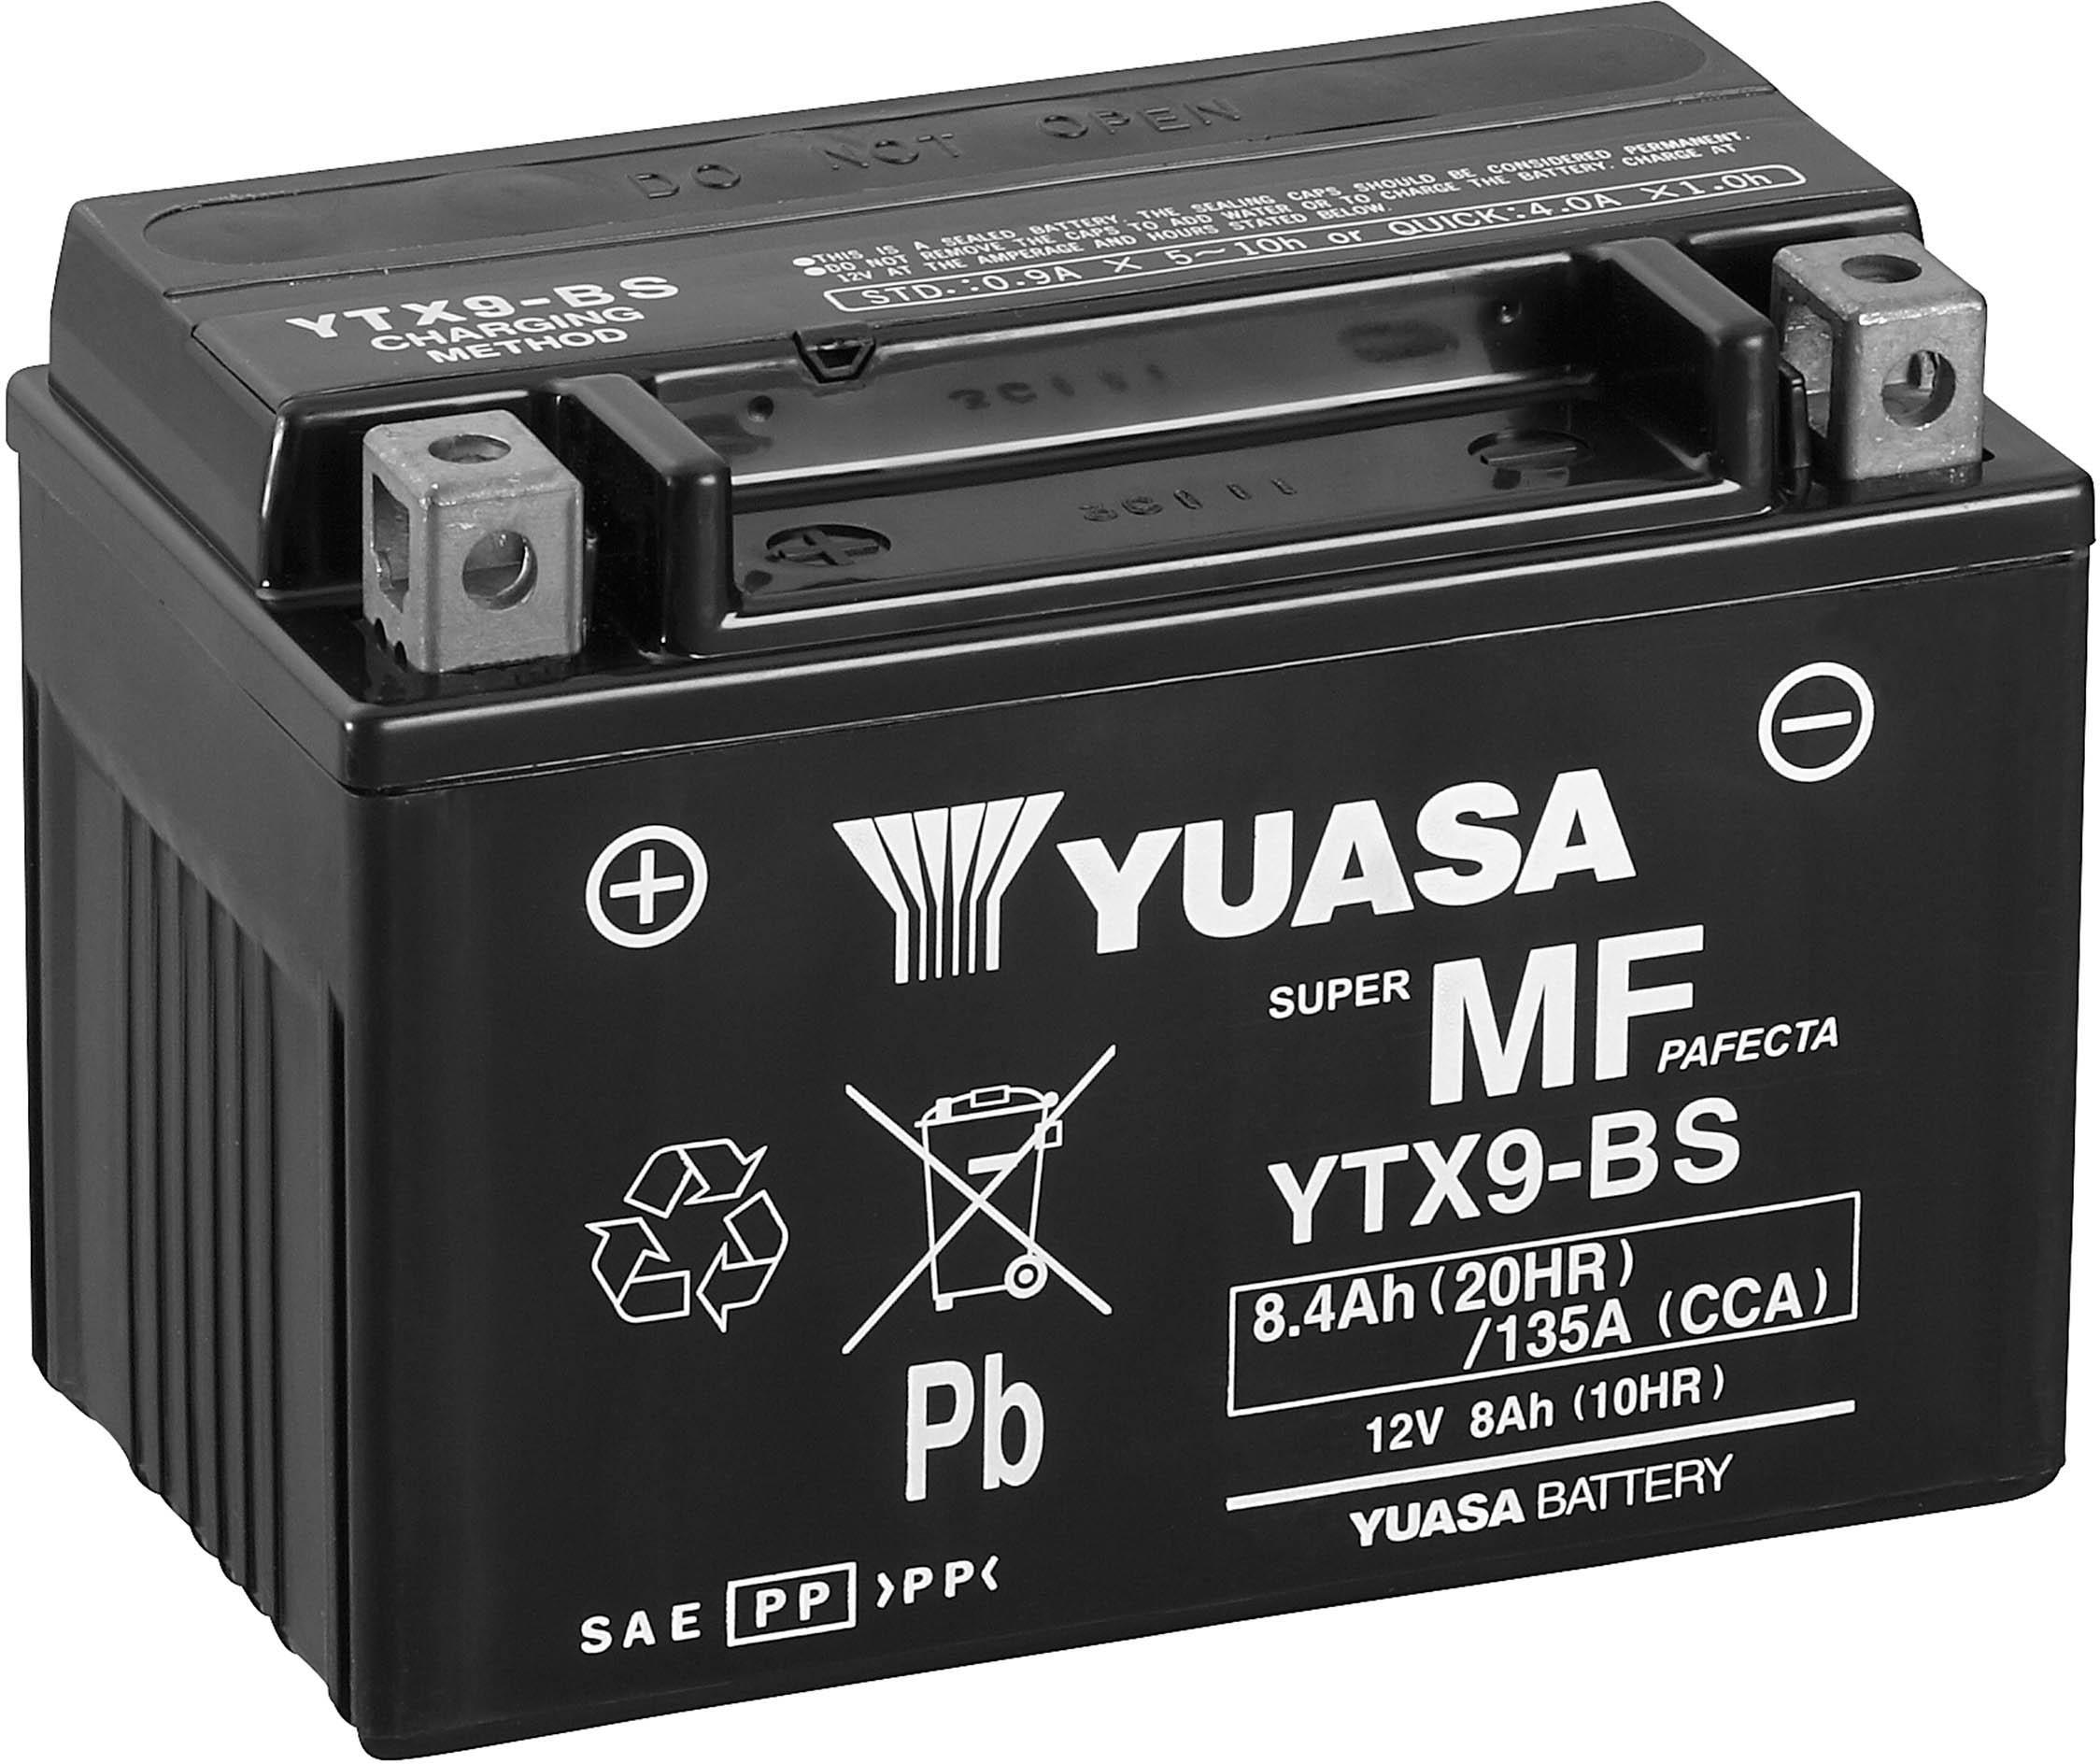 Yuasa Ytx9-Bs Maintenance Free Motorcycle Battery